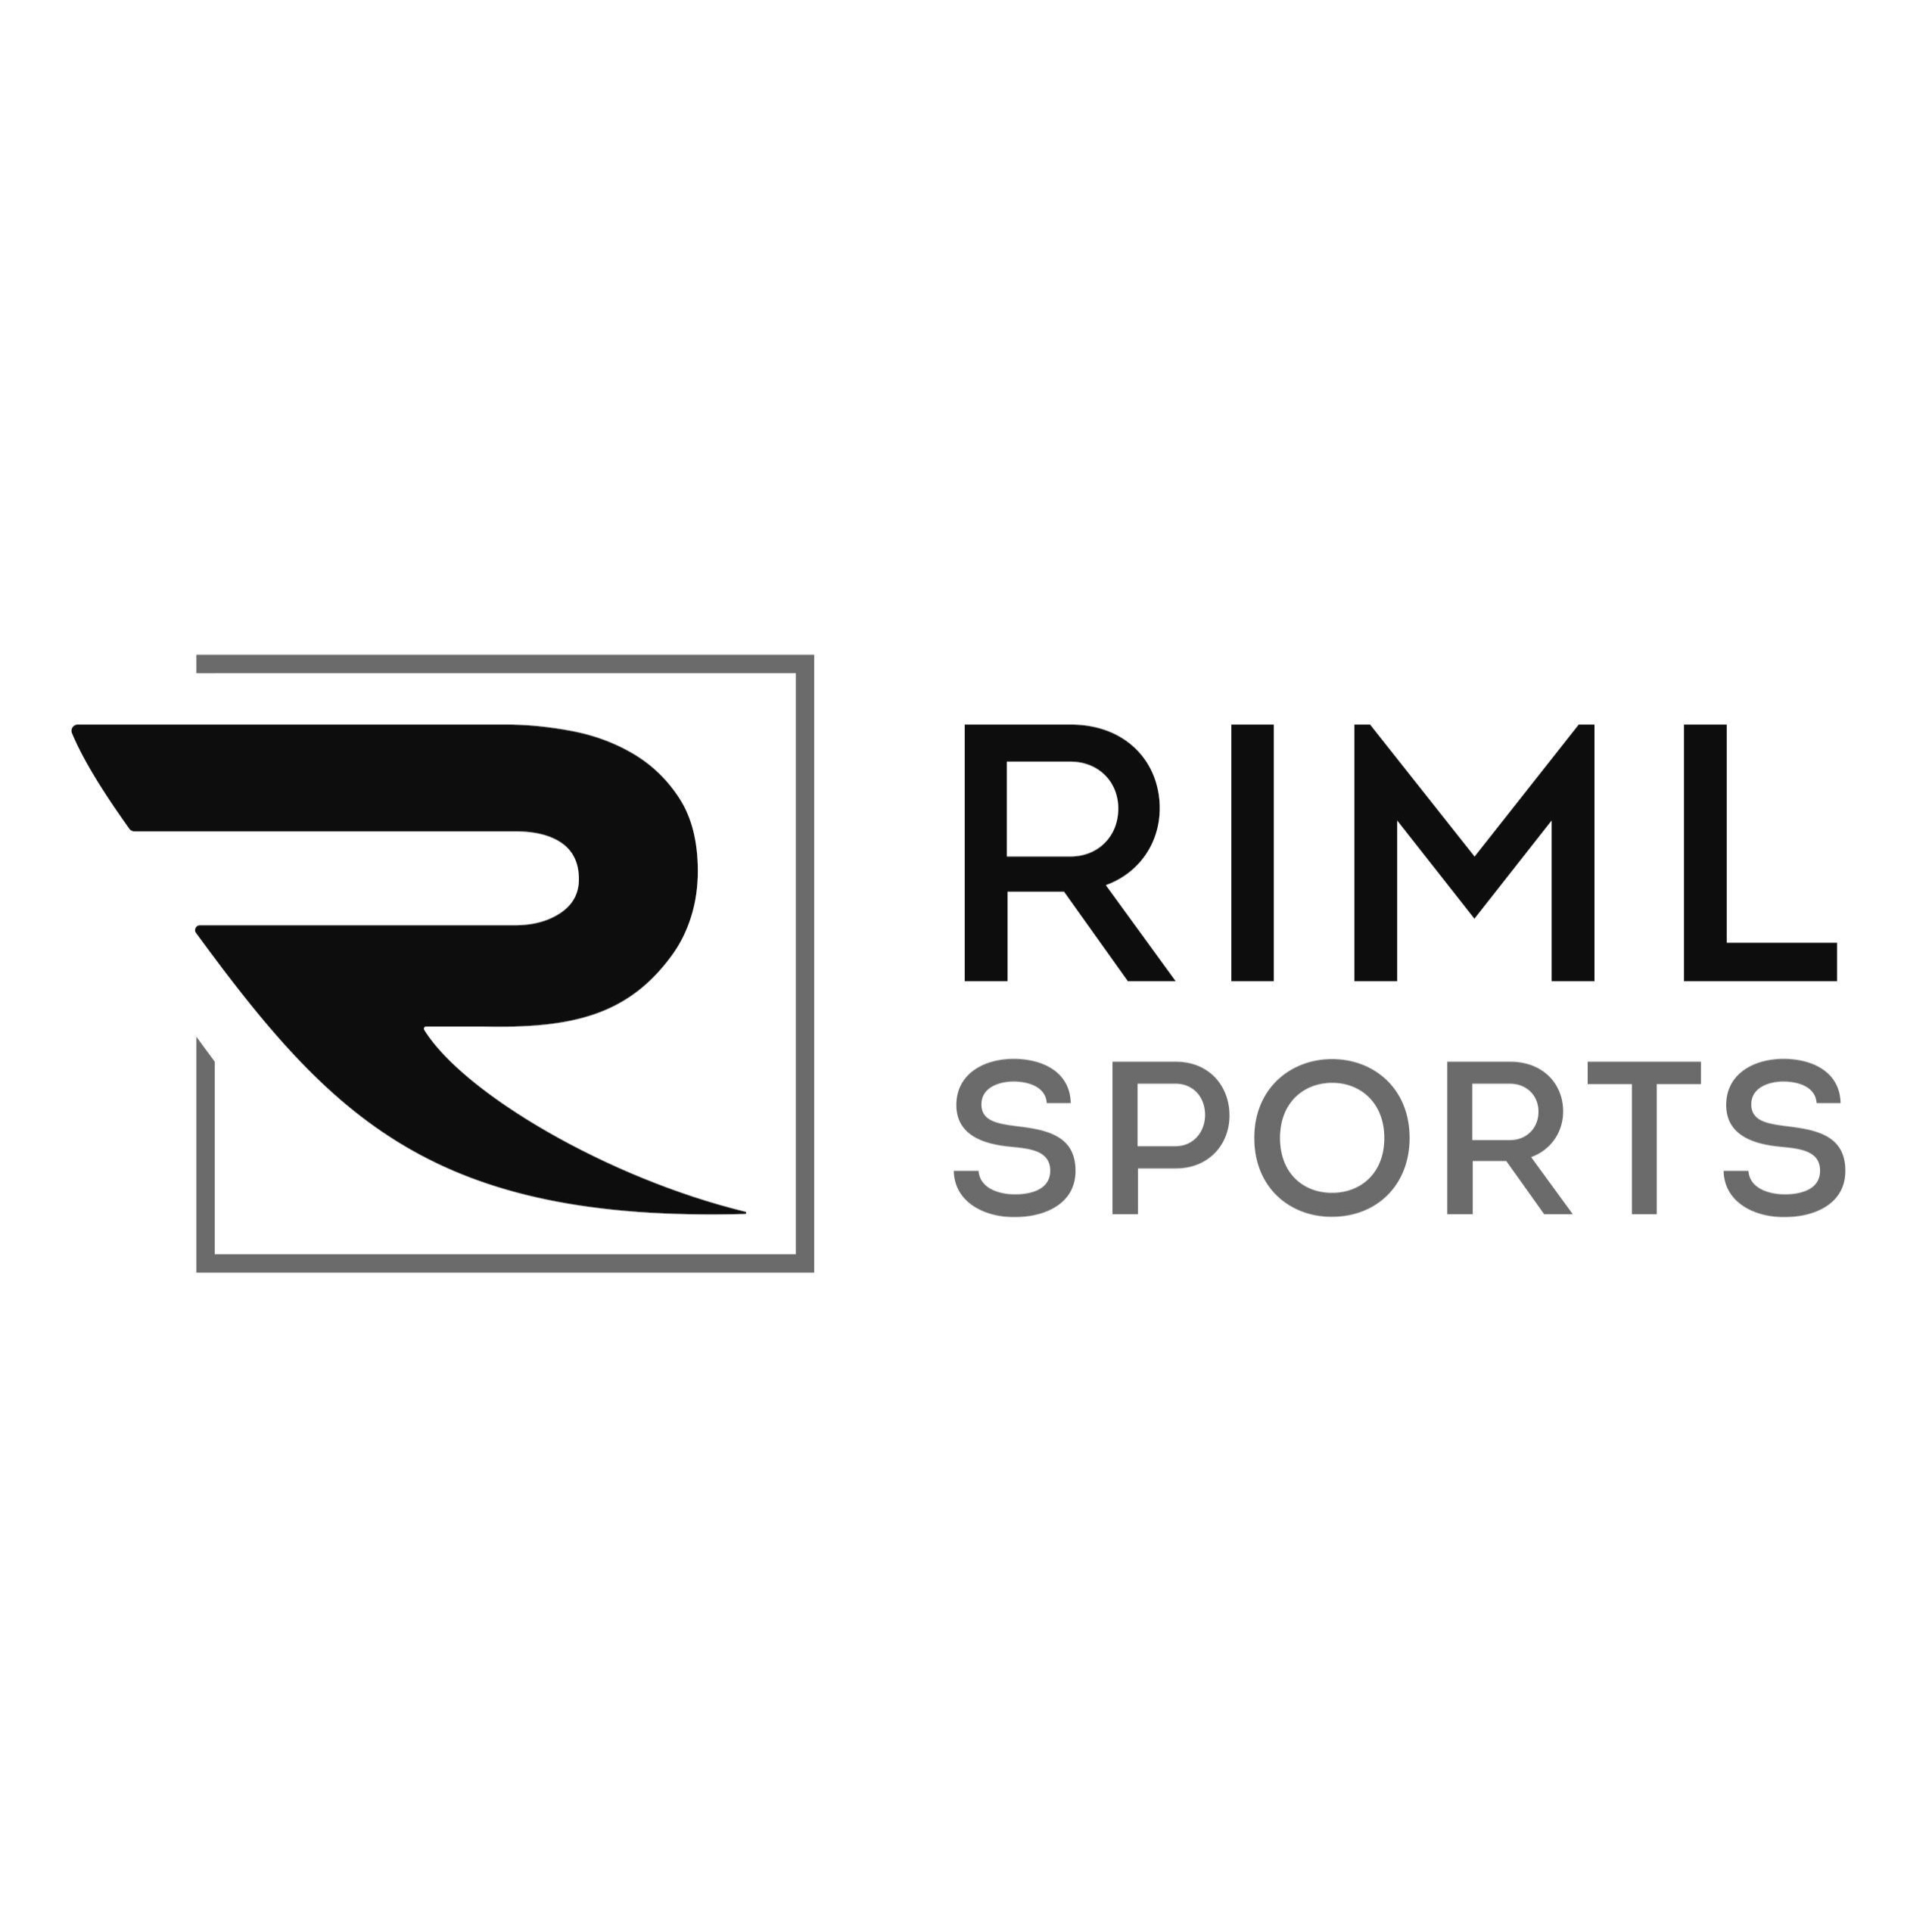 RIML SPORTS Längenfeld Logo